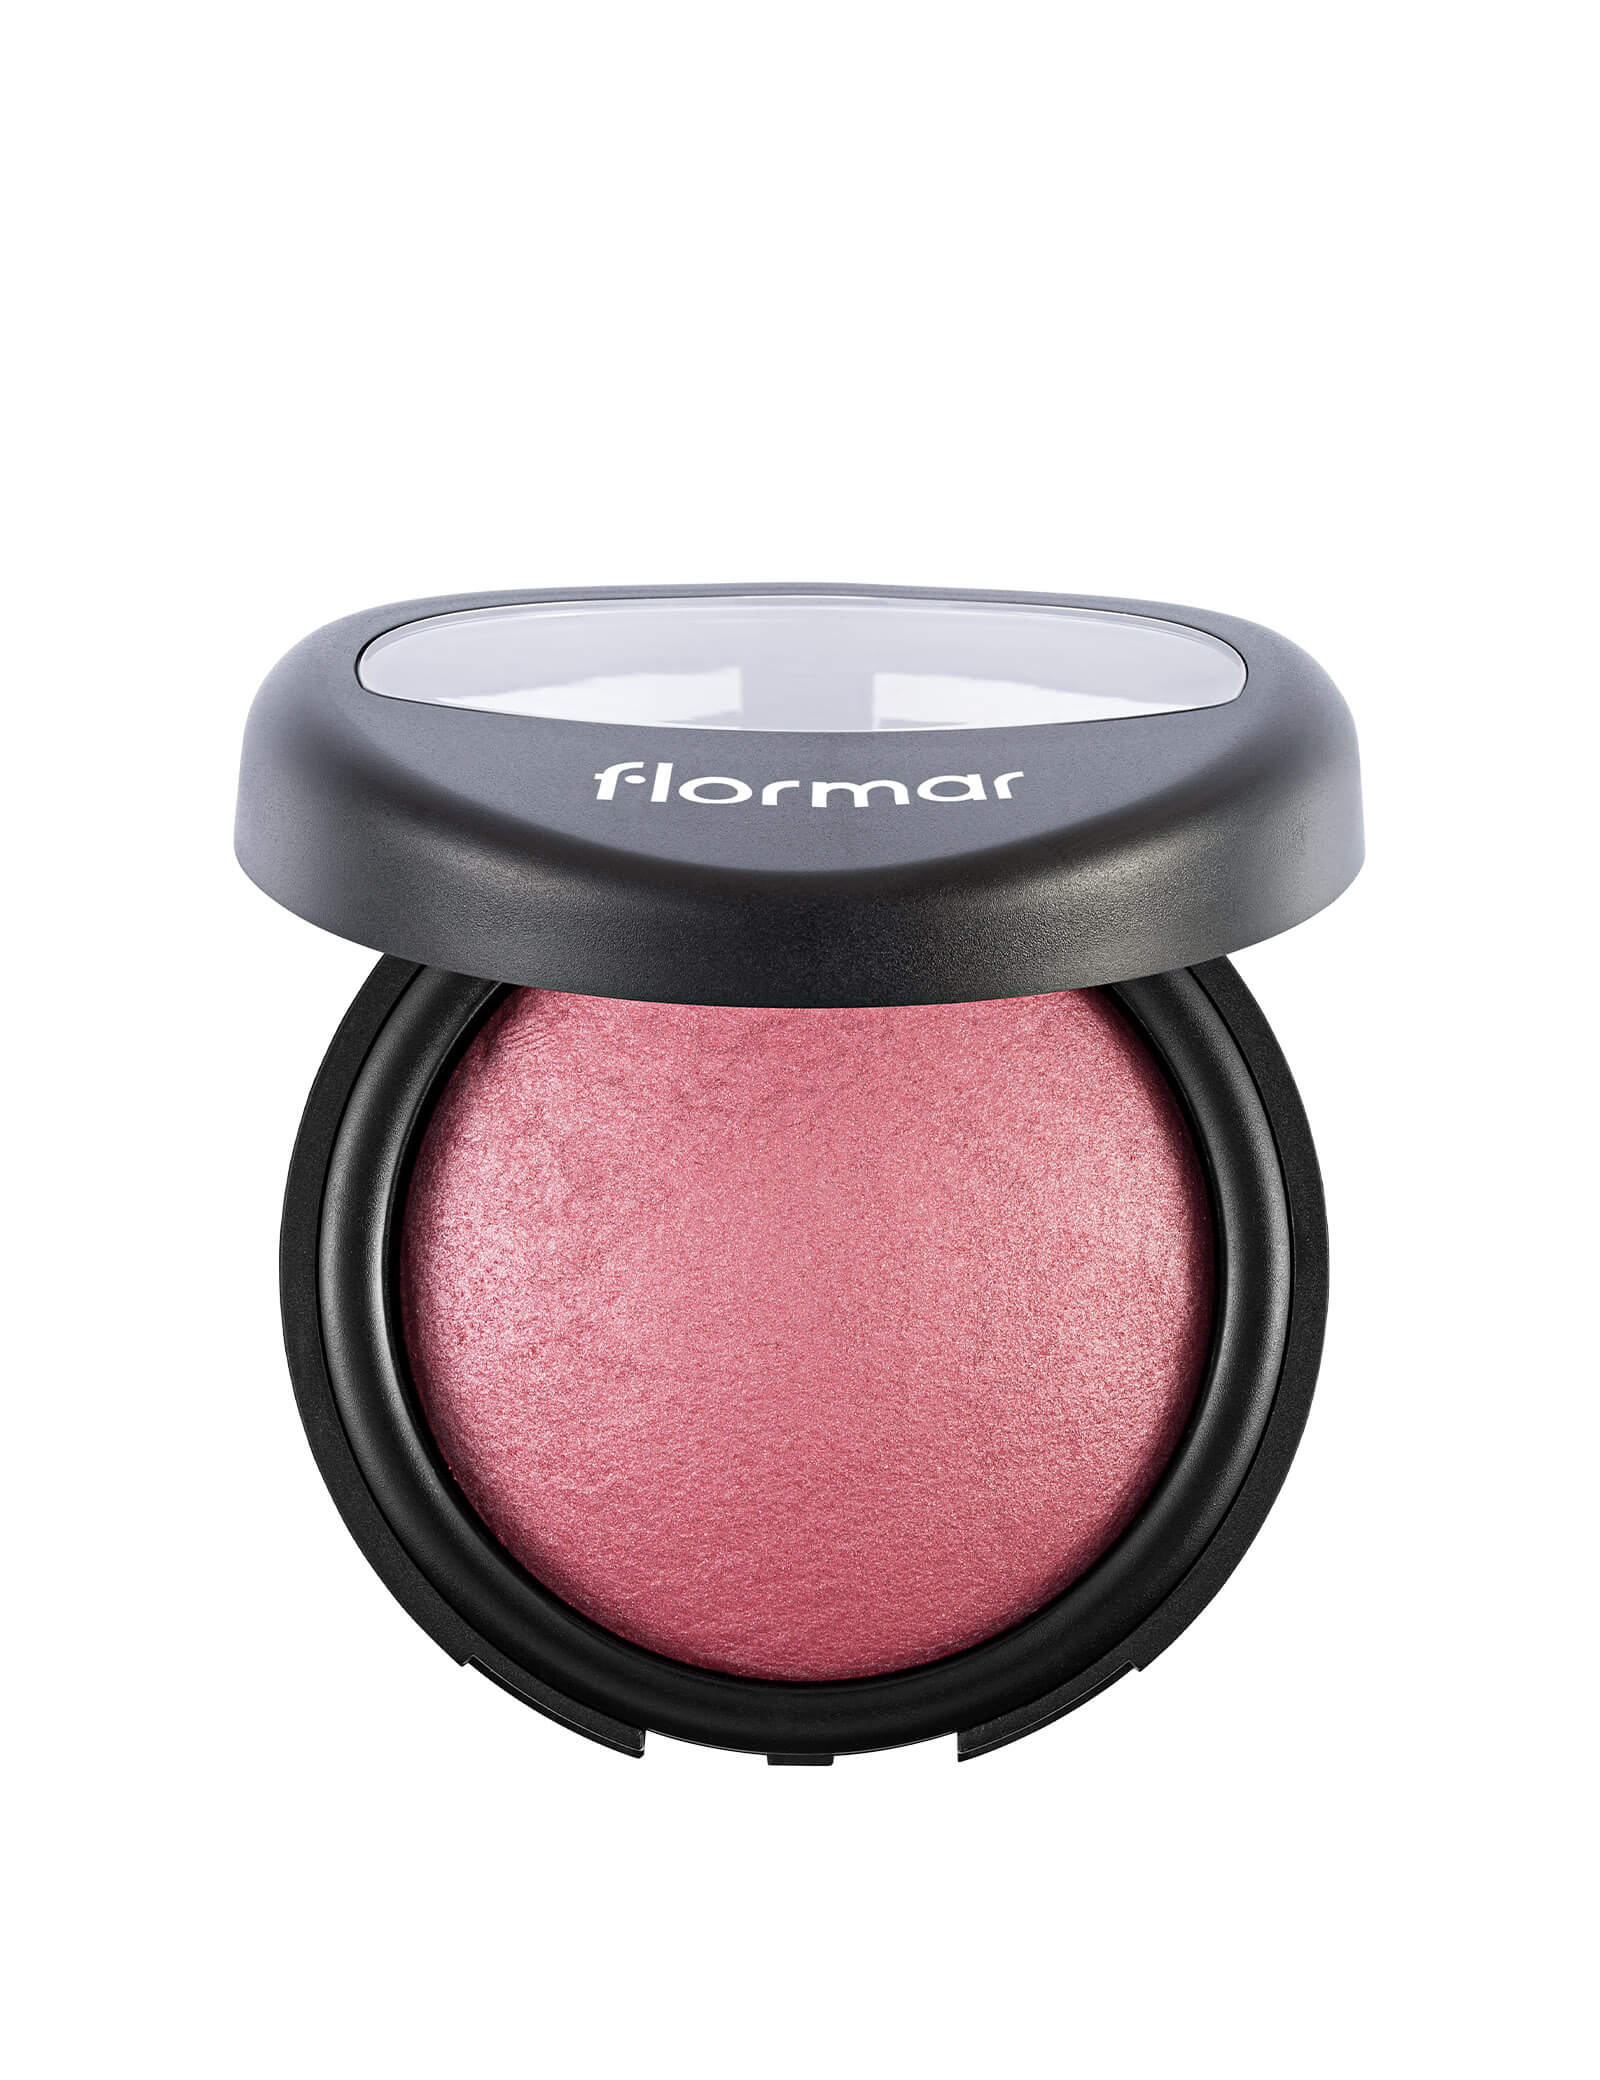 Flormar Terracotta Blush - Shimmery Pink